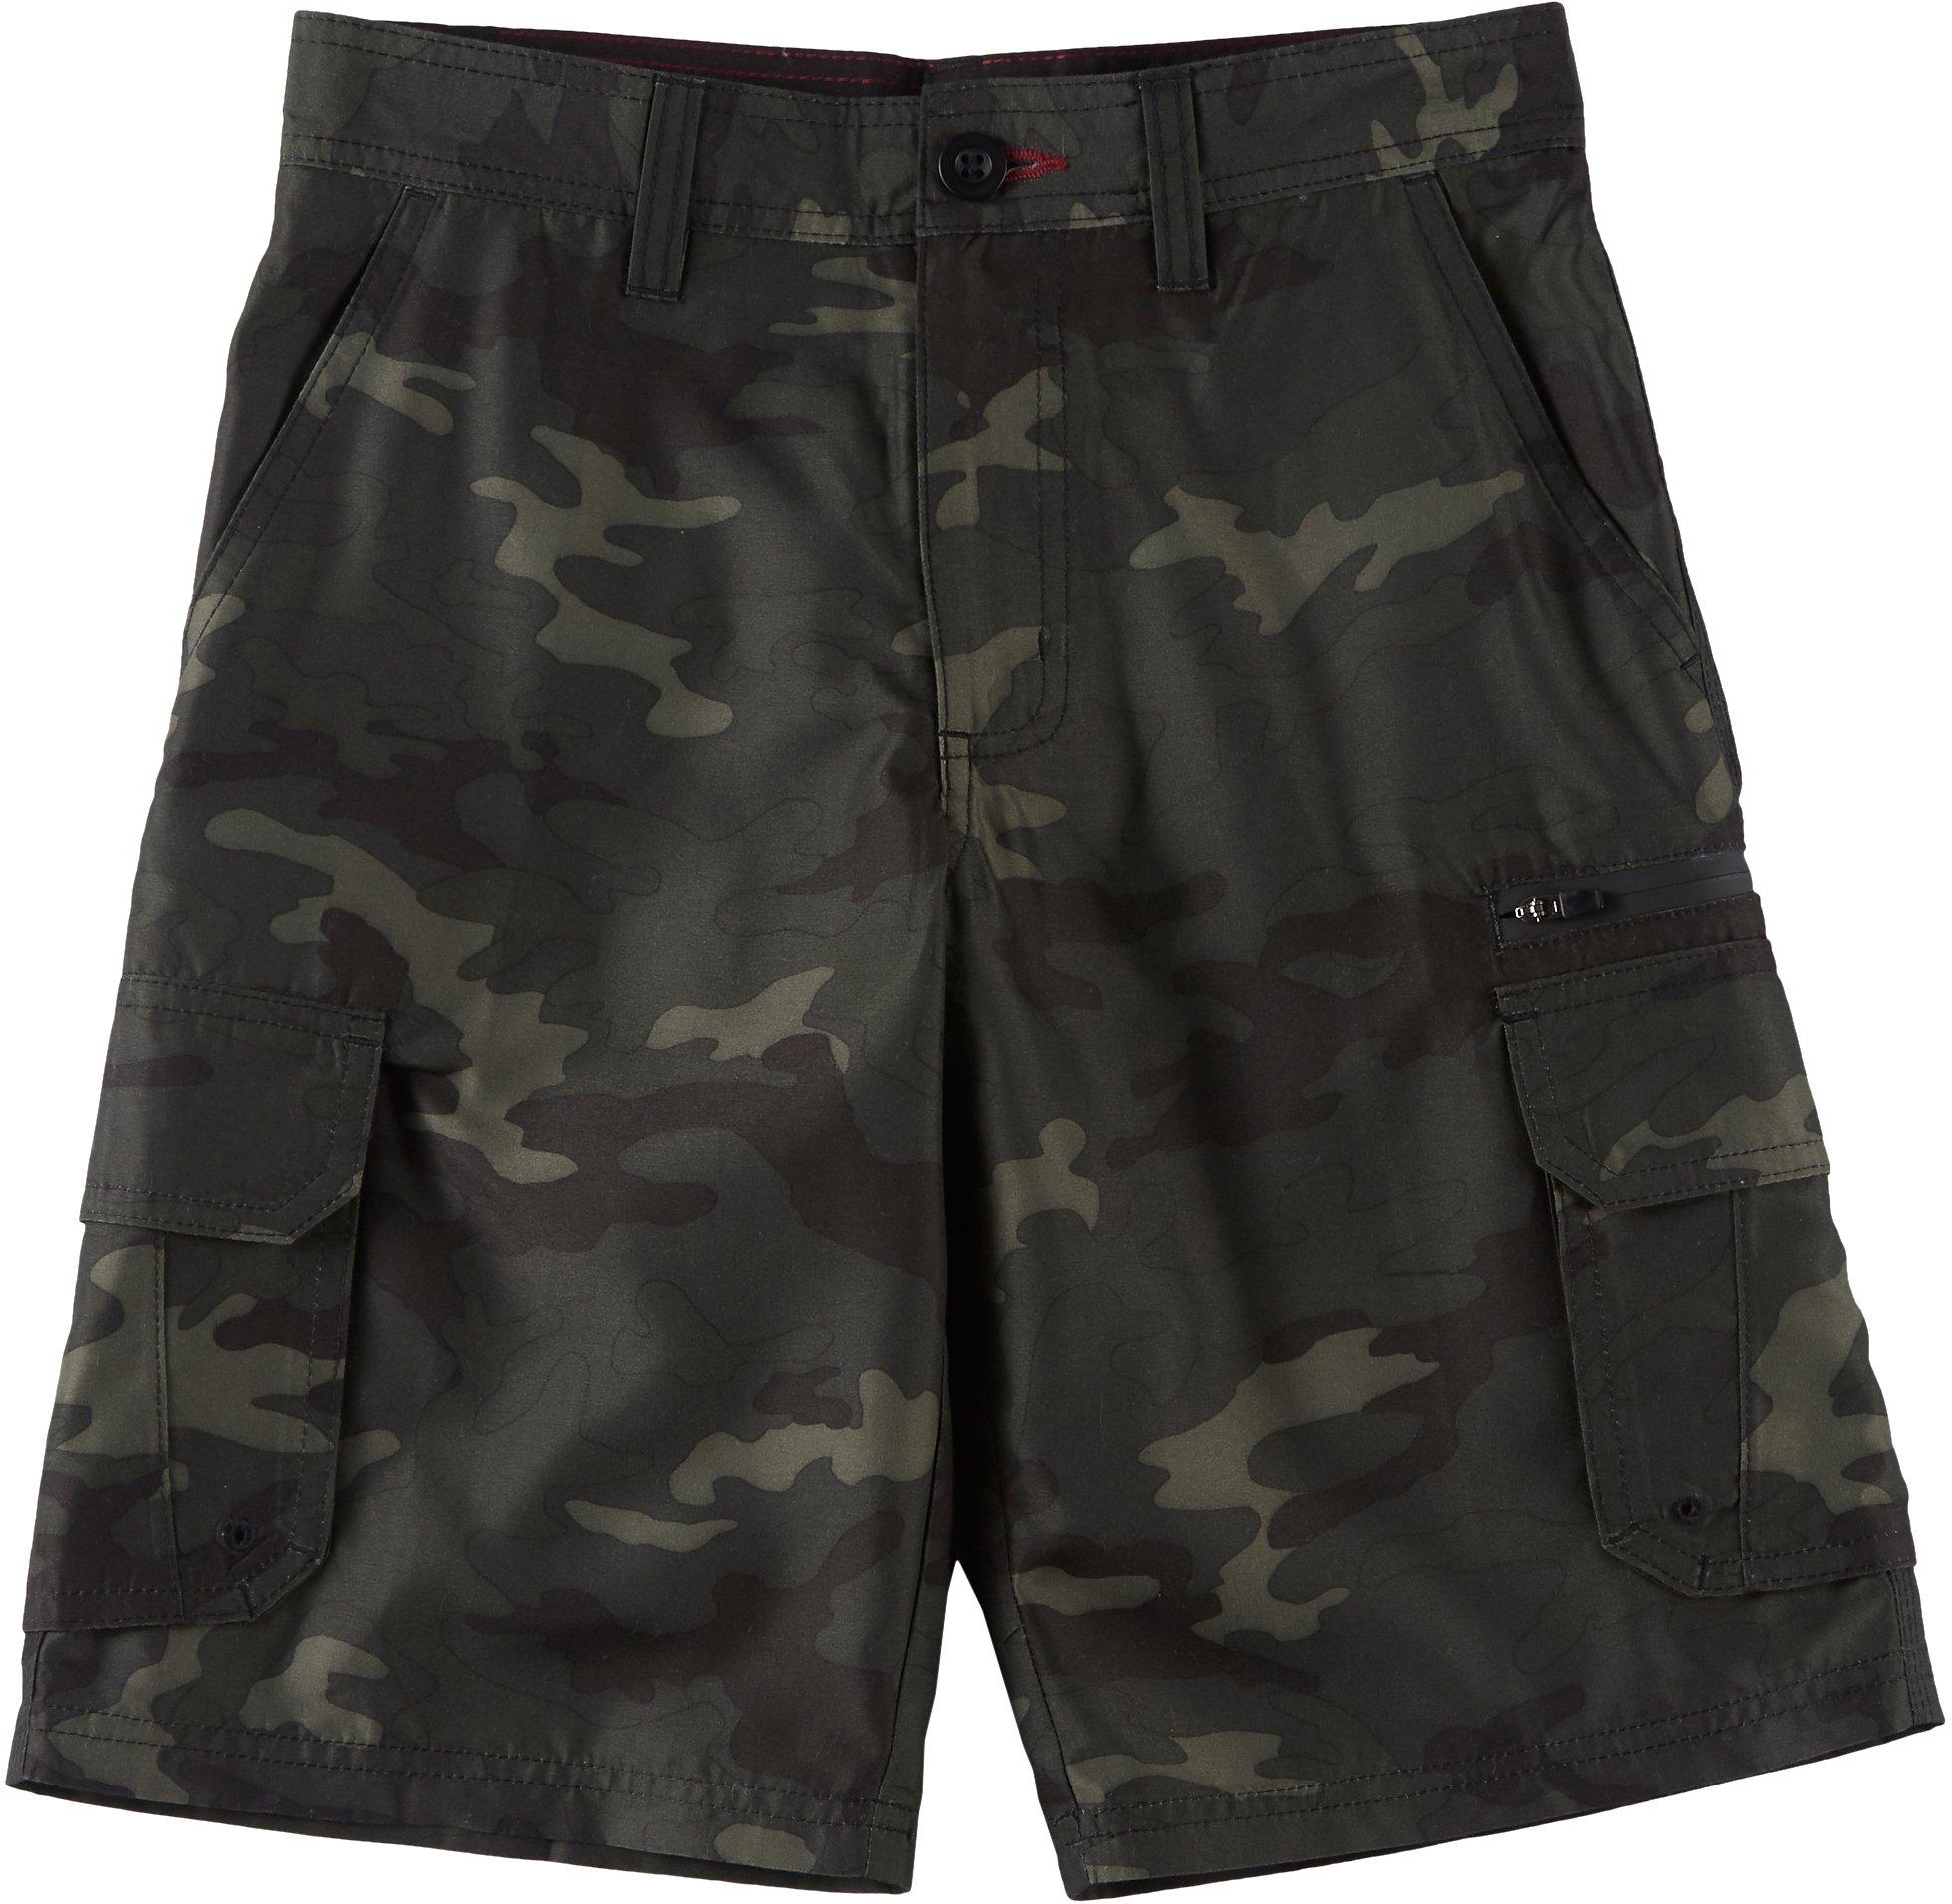 Reel Legends Cargo Shorts Men's Size 36 (8.25 in) Green Camouflage